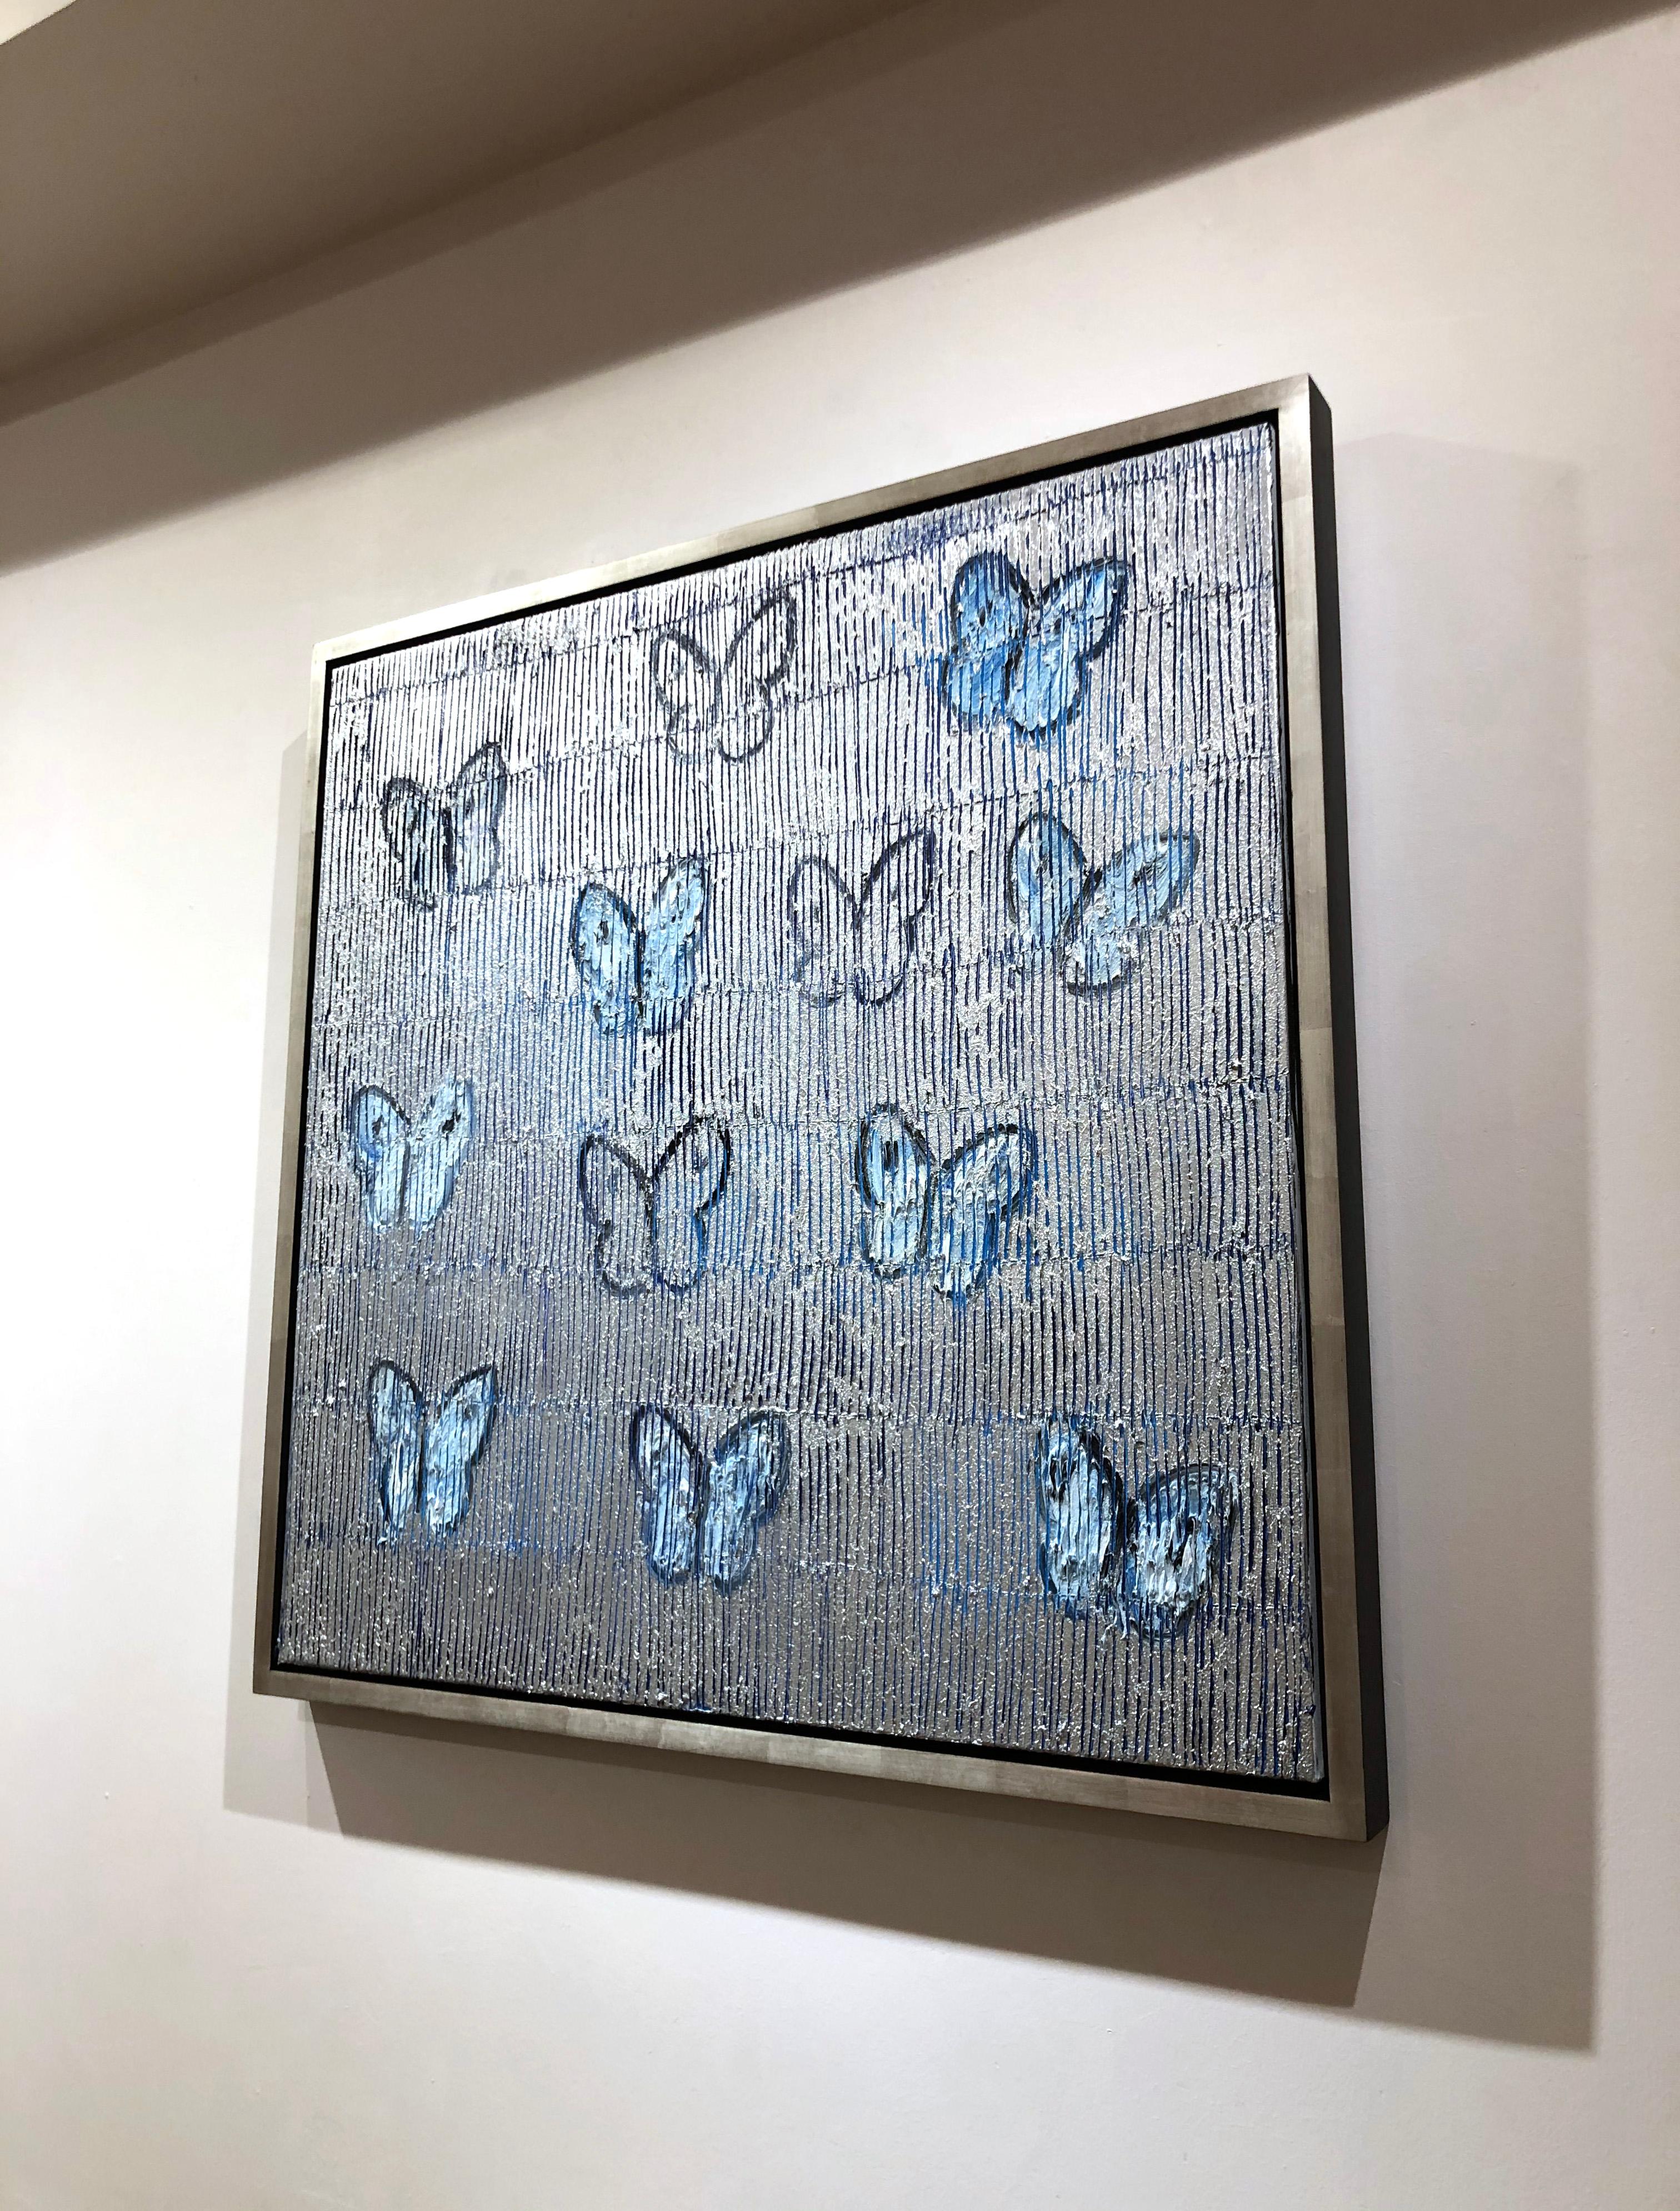 Artist:  Slonem, Hunt
Title:  Silver Ascension 
Series:  Butterflies
Date:  2019
Medium:  Oil on canvas
Unframed Dimensions:  30